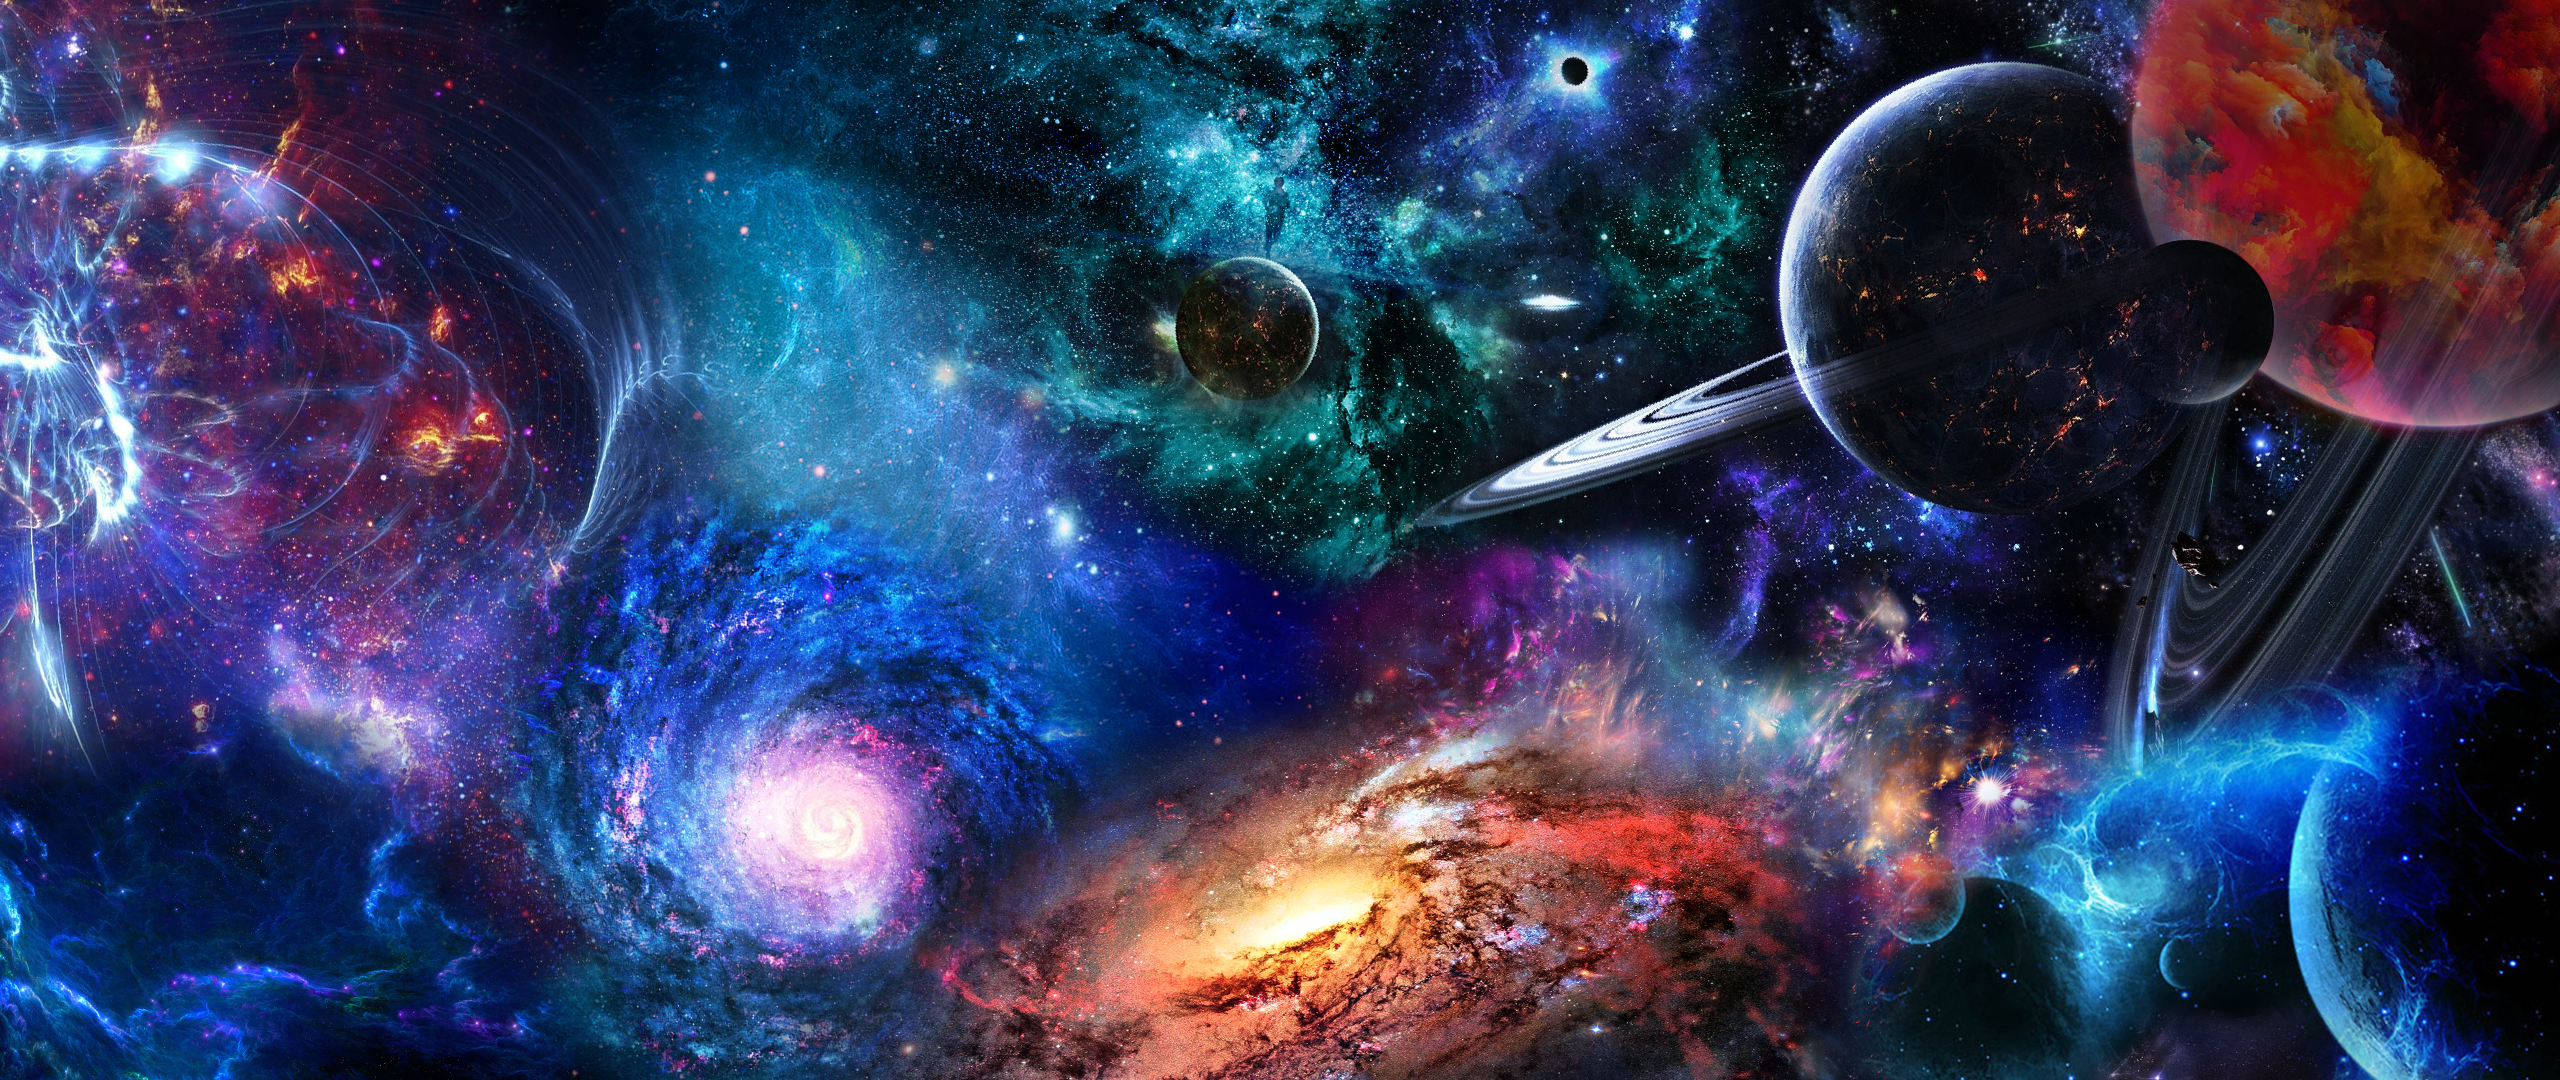 Space Background 2 by vav17 on DeviantArt